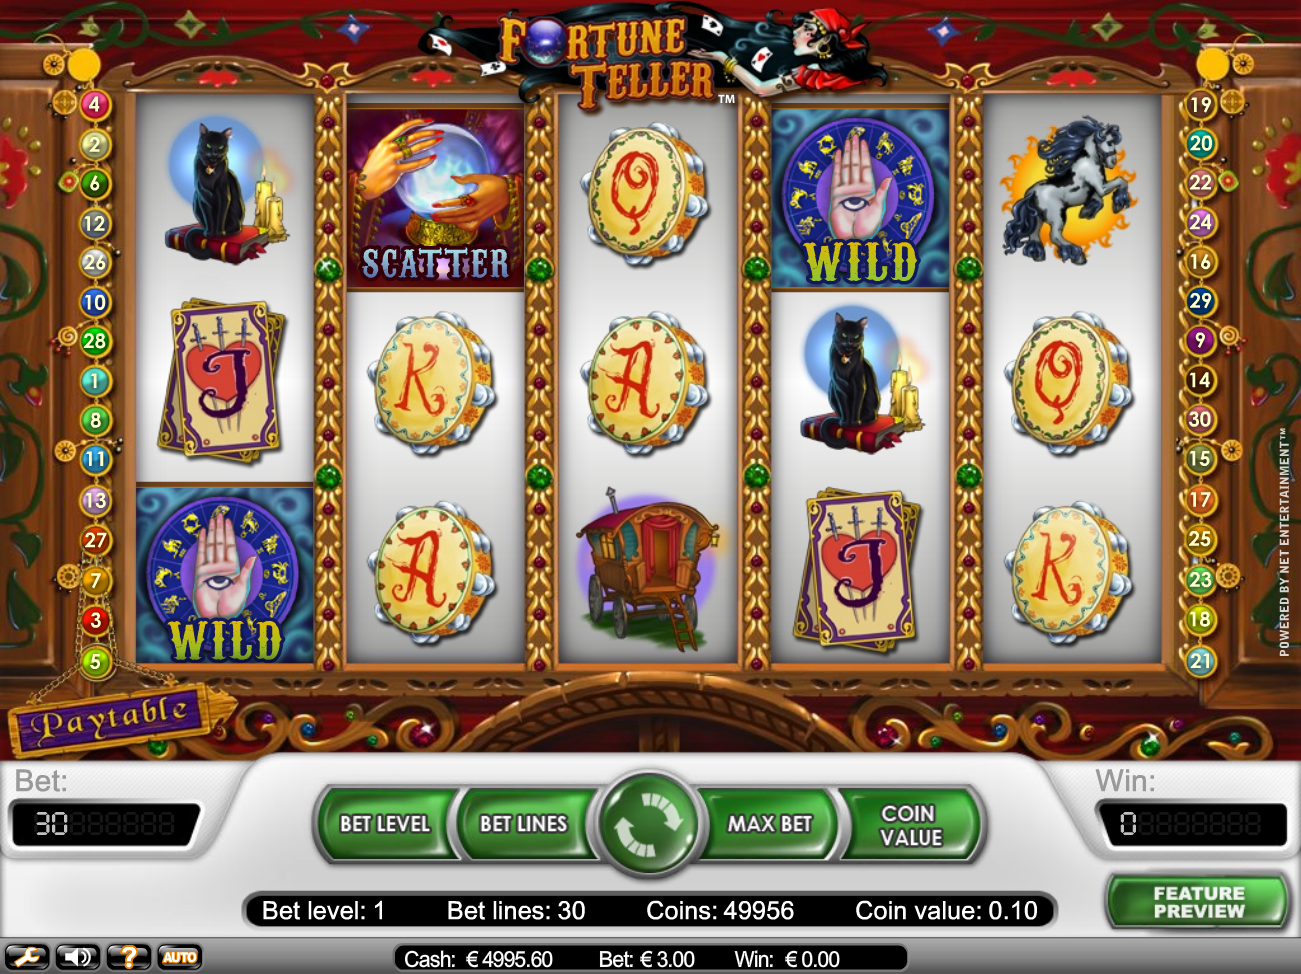 Fortune Teller (Fortune Teller) from category Slots